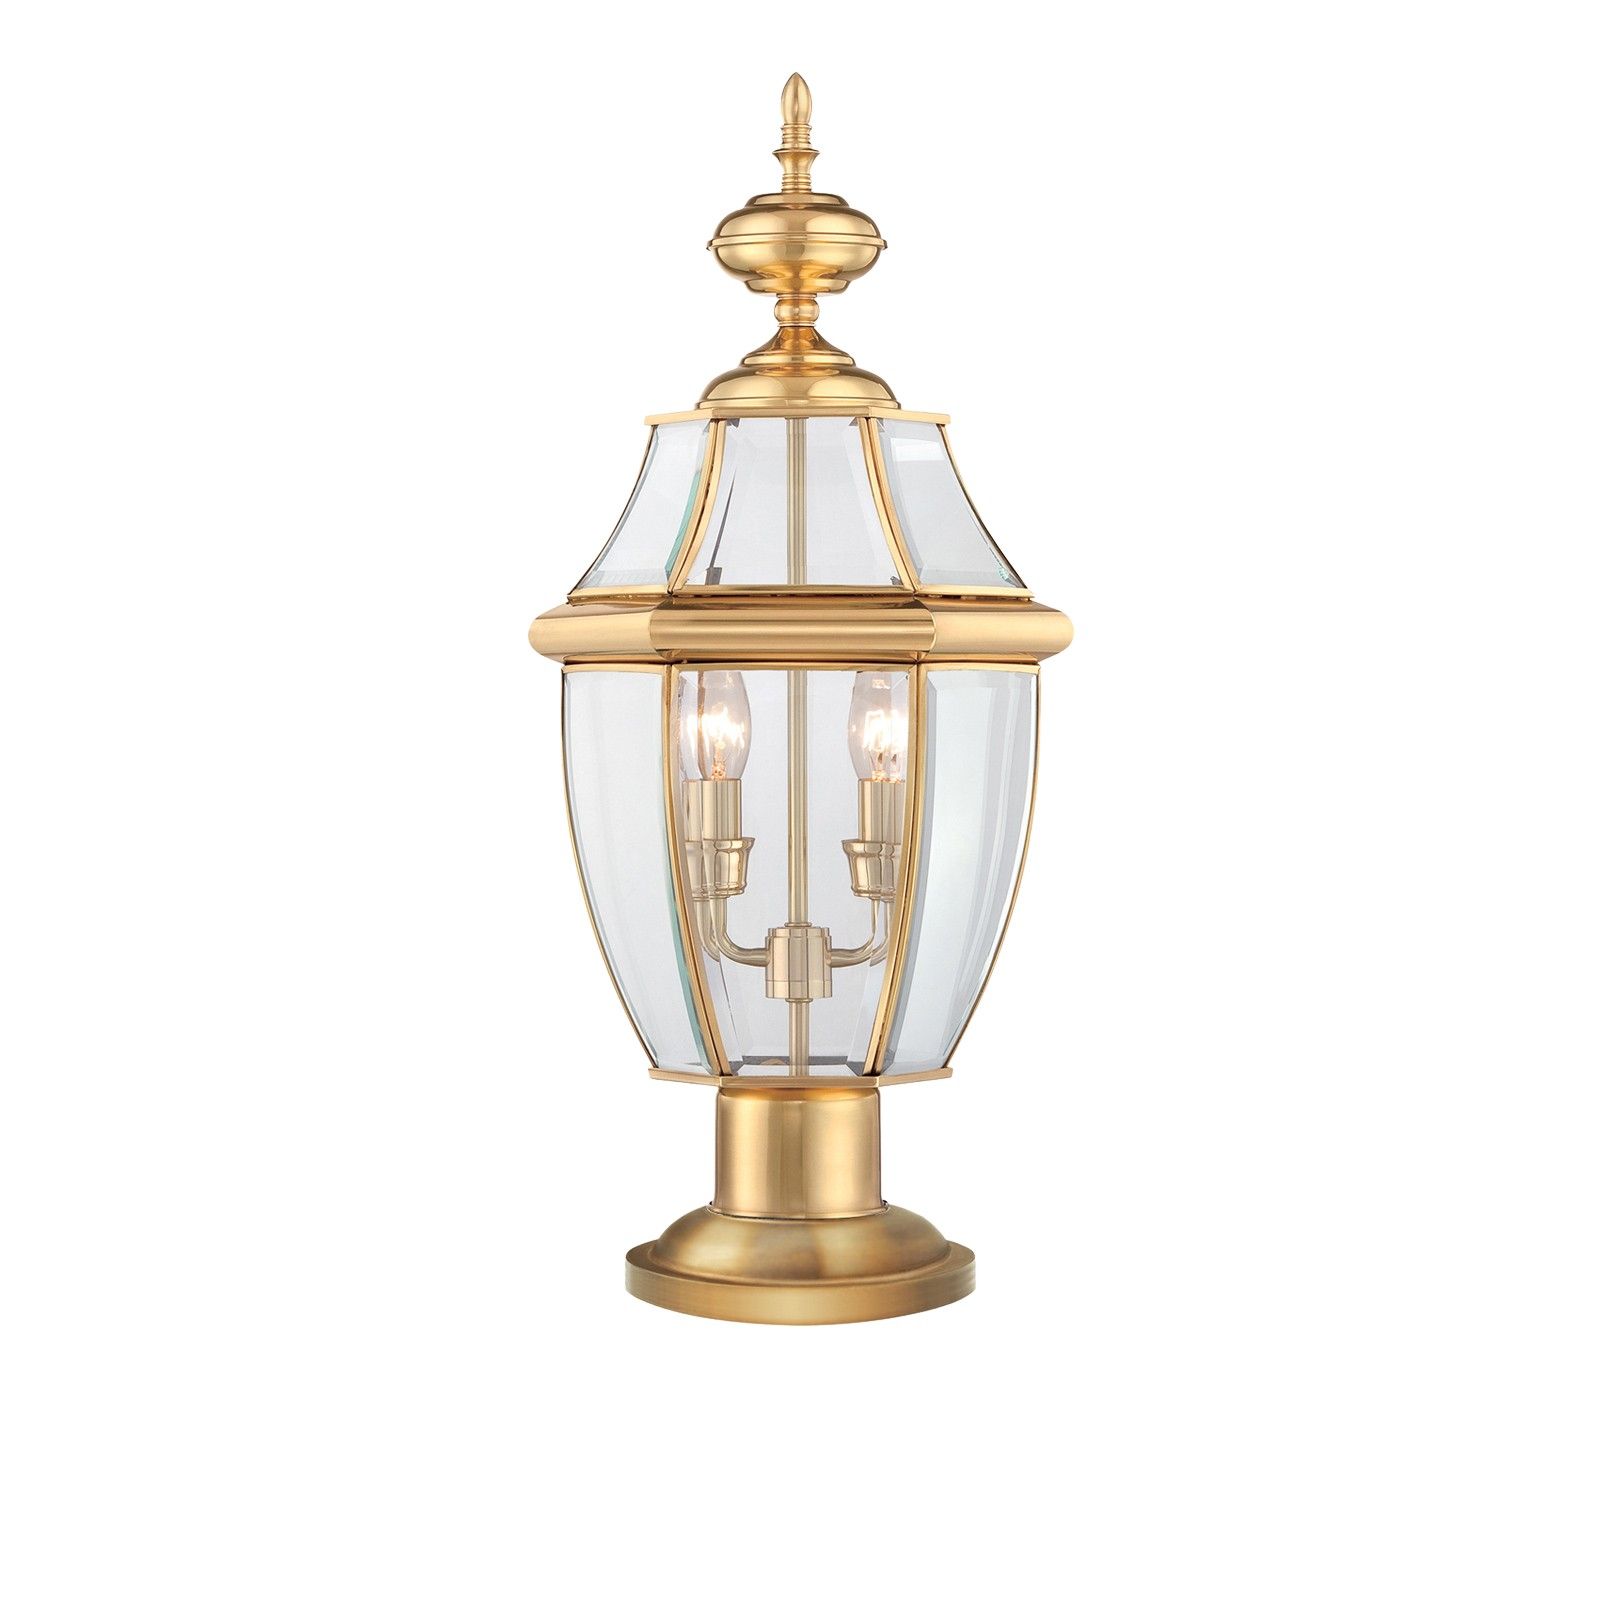 Newbury Pedestal Lantern in Polished Brass